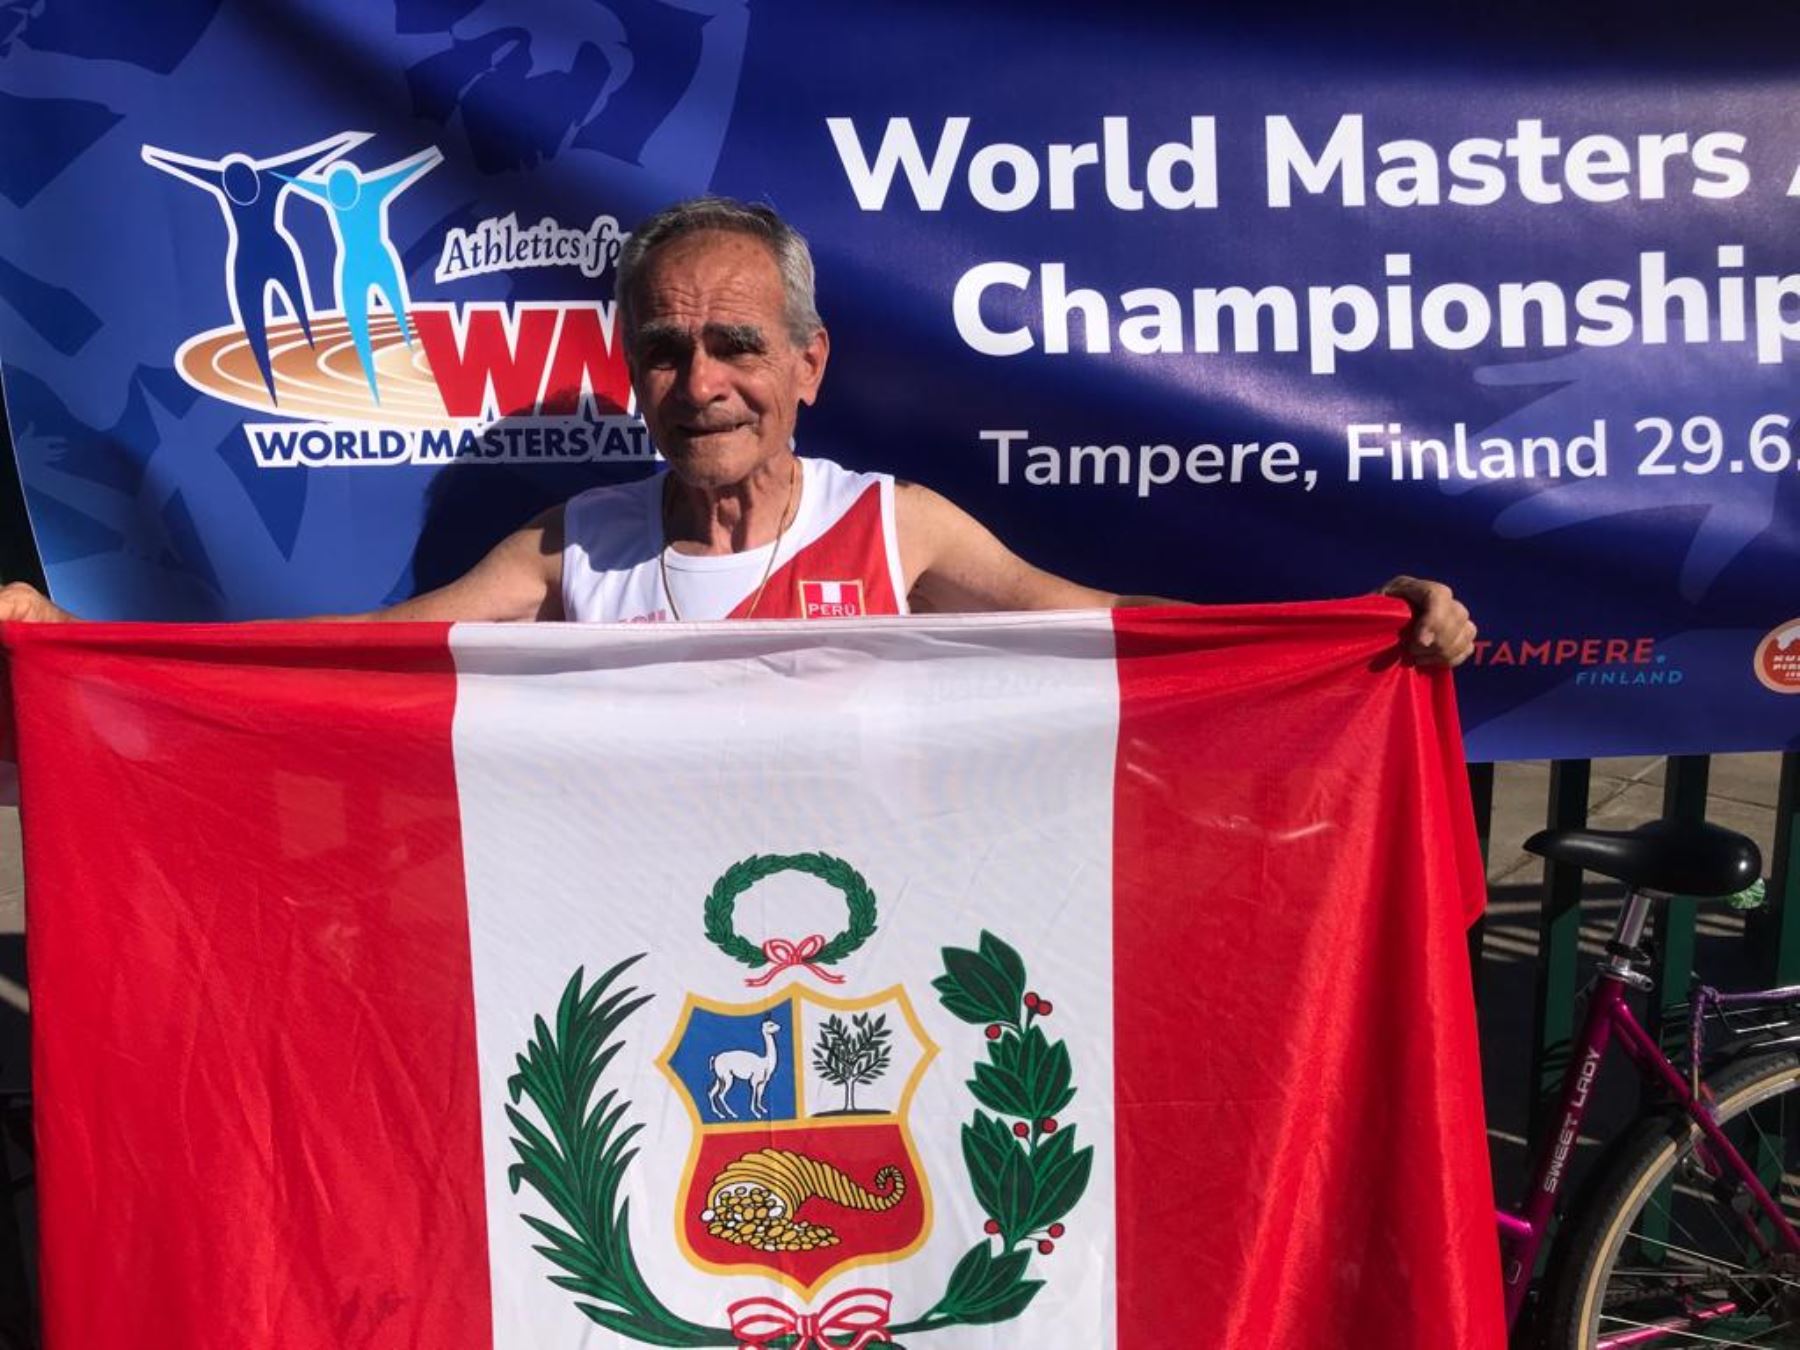 Jaime León, de 80 años, se consagró subcampeón mundial de atletismo